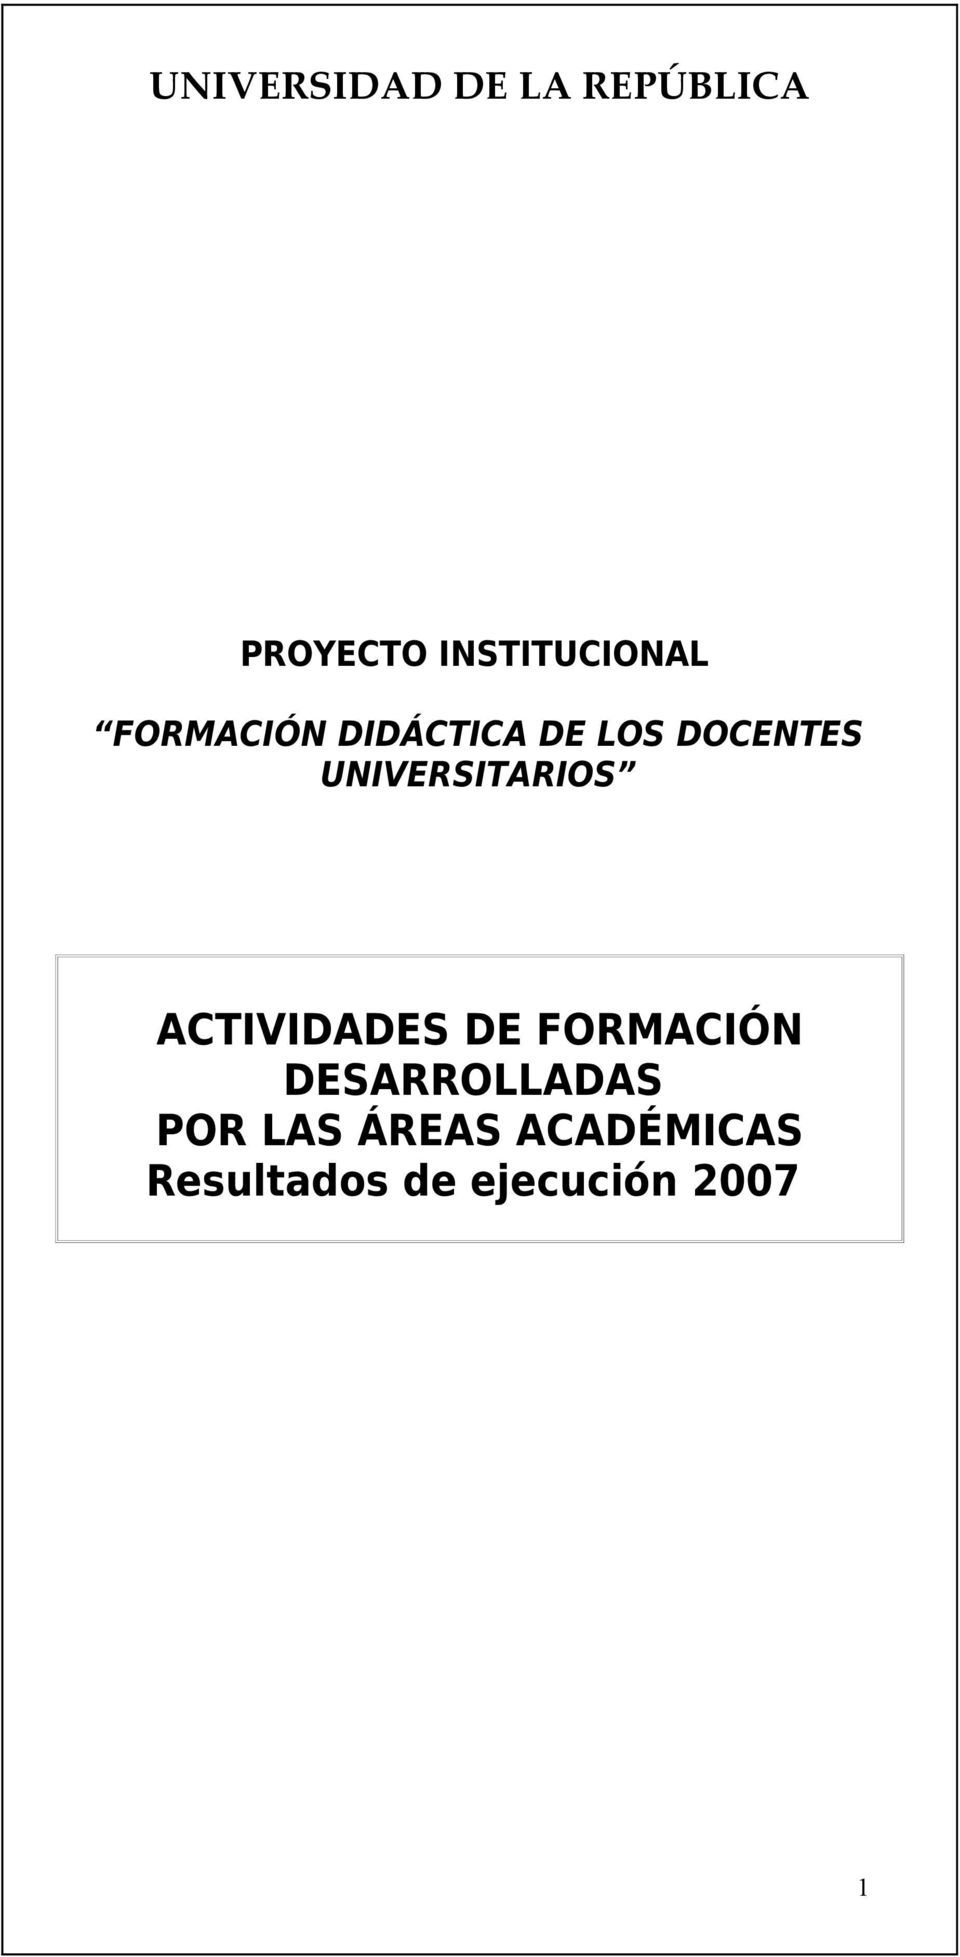 DOCENTES UNIVERSITARIOS ACTIVIDADES DE FORMACIÓN